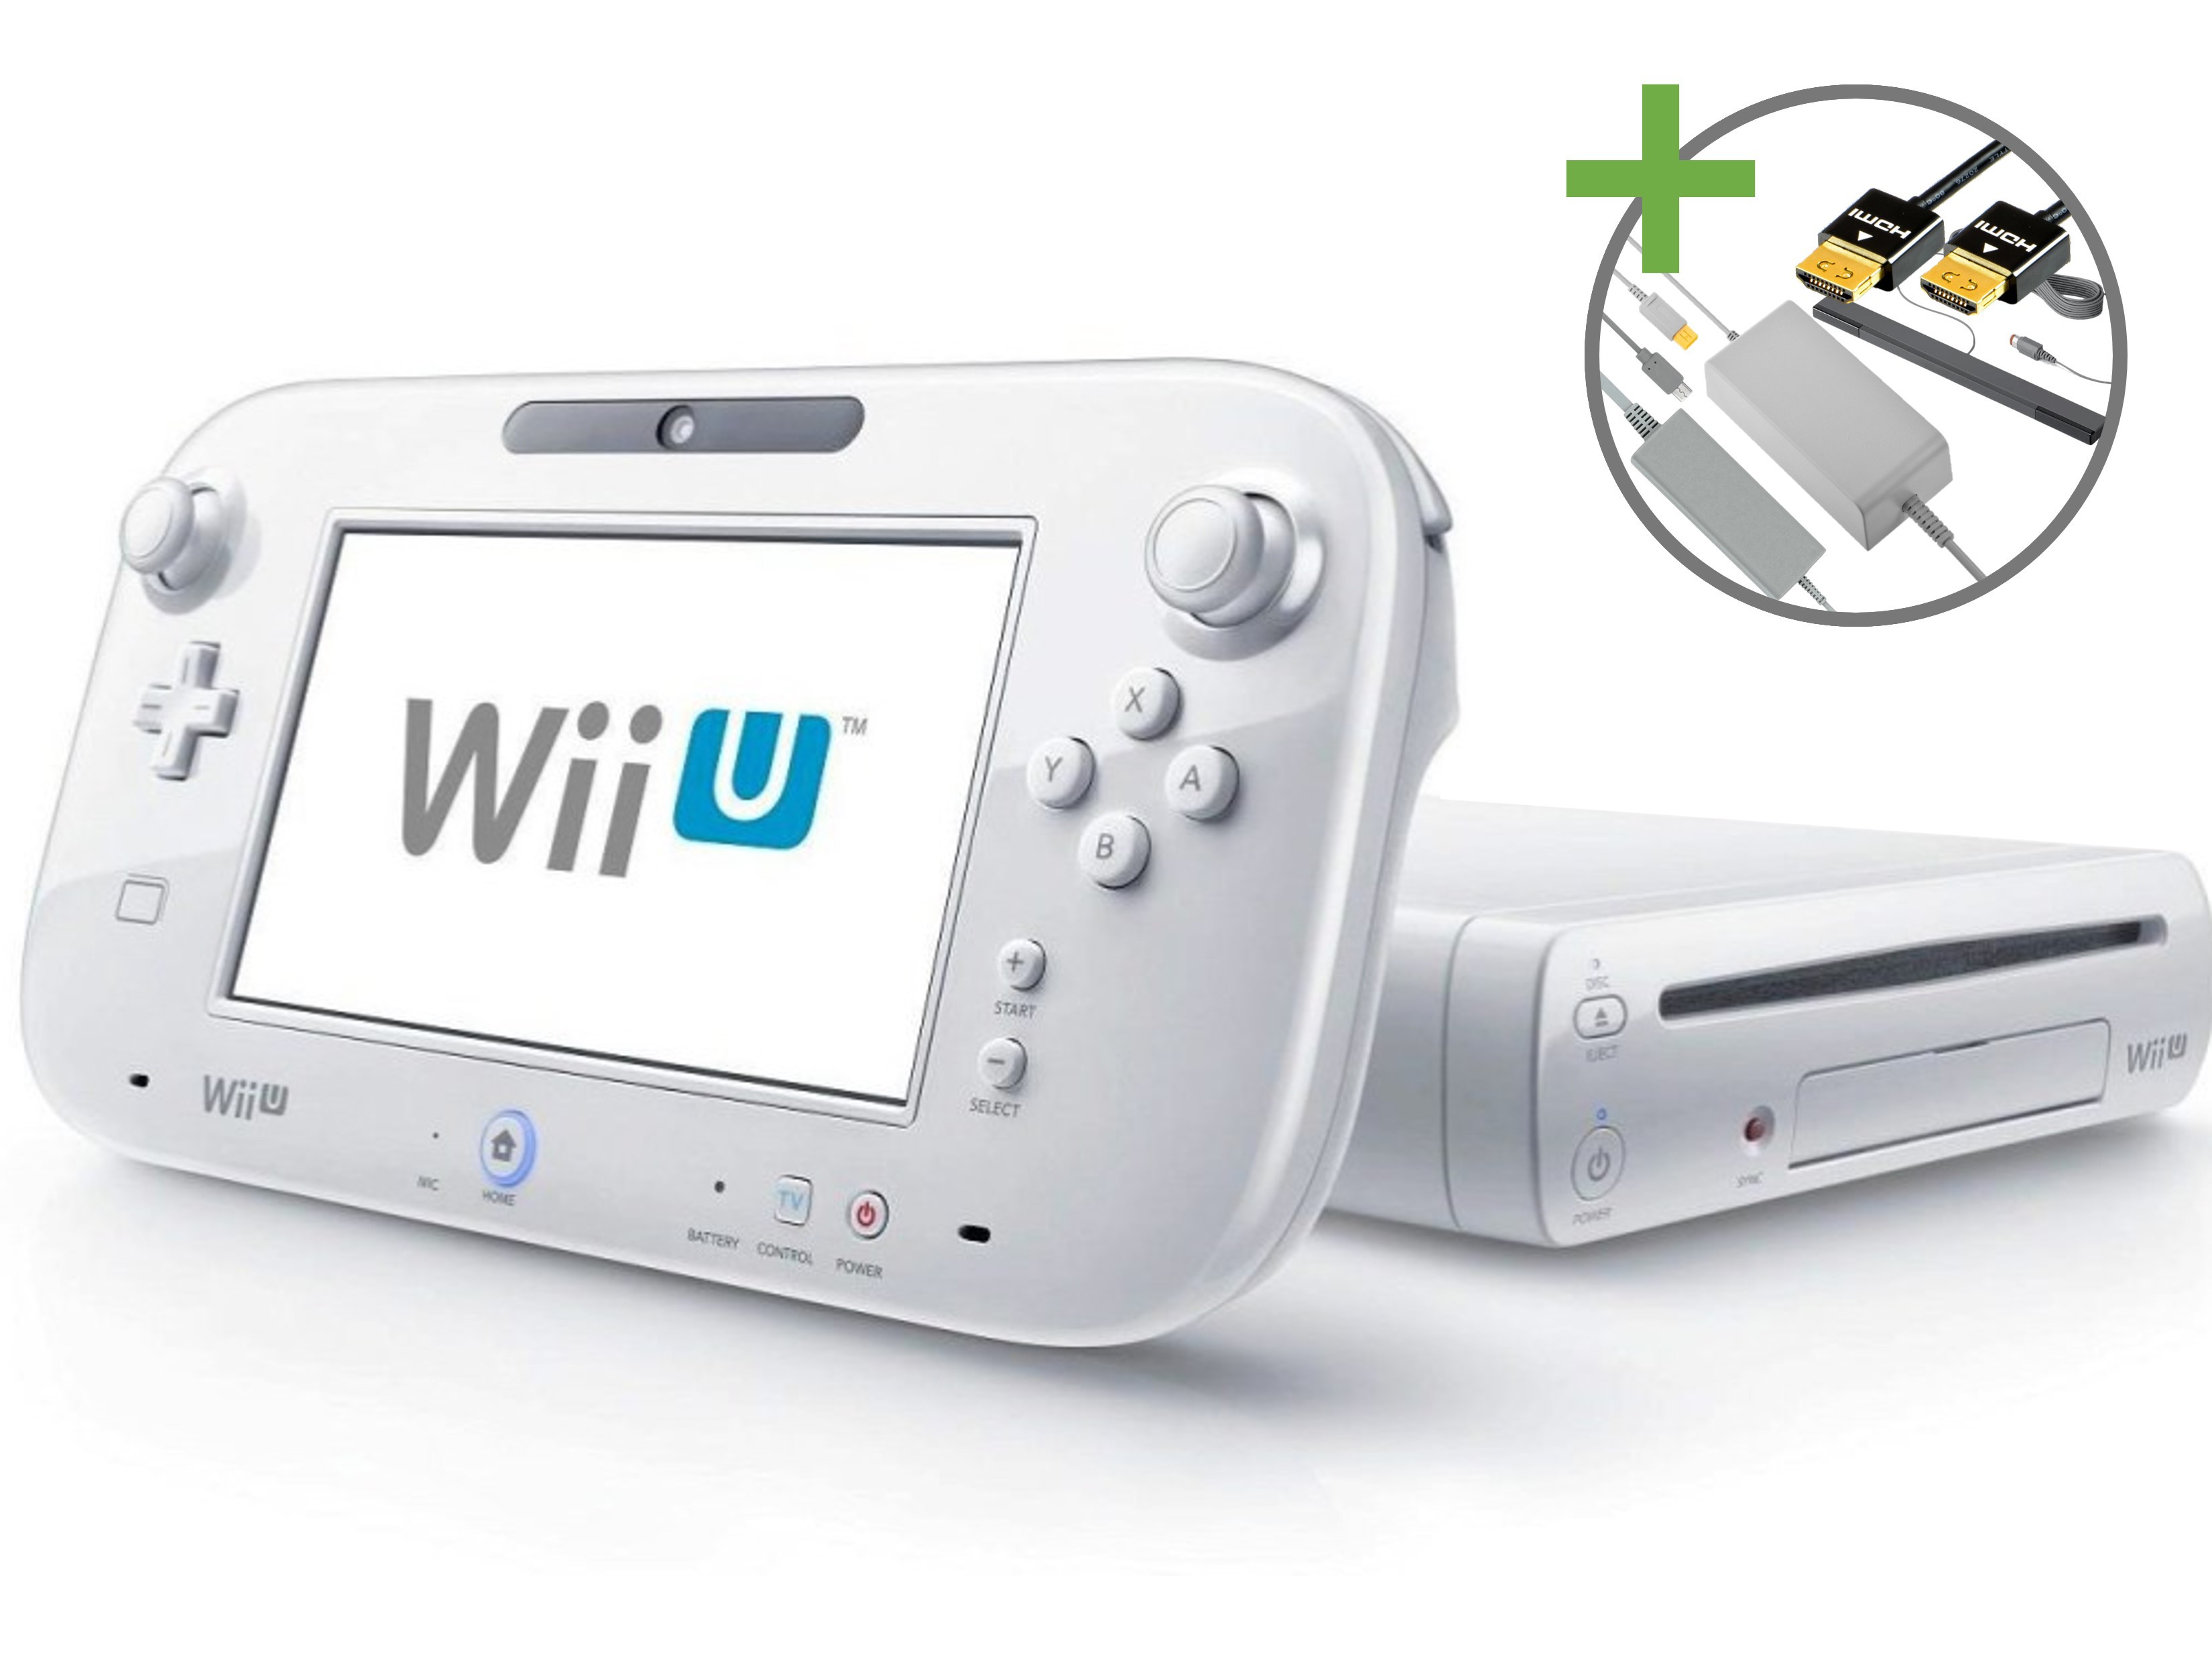 Nintendo Wii U Starter Pack - Basic White Pack Edition [Complete] - Wii U Hardware - 2